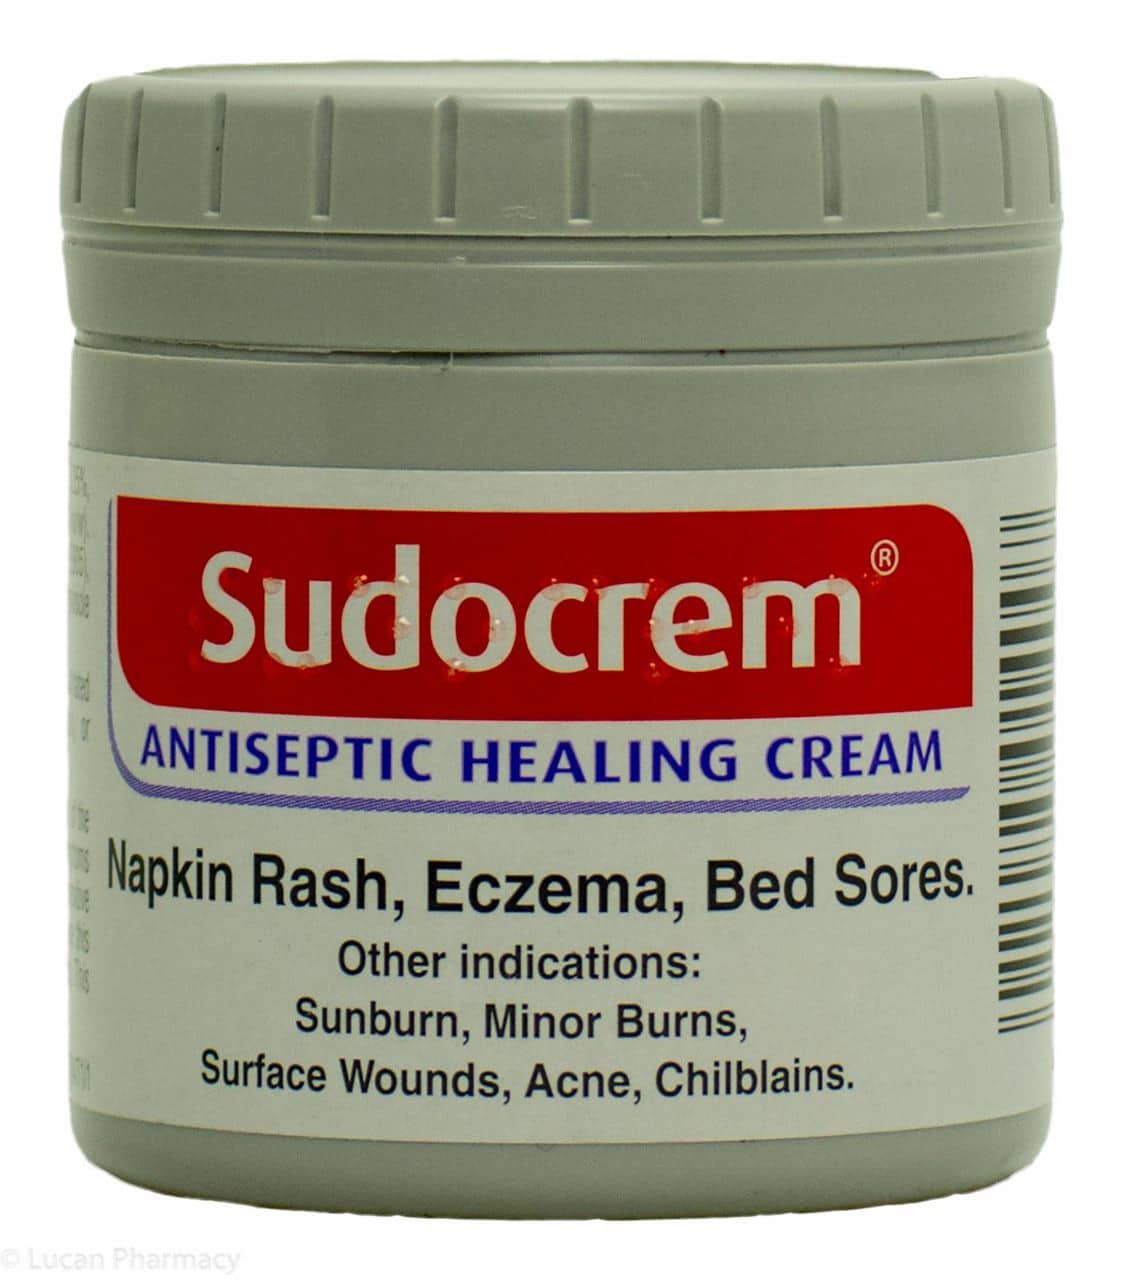 Sudocrem Antiseptic Healing Cream : Sudocrem Antiseptic Healing Cream ...